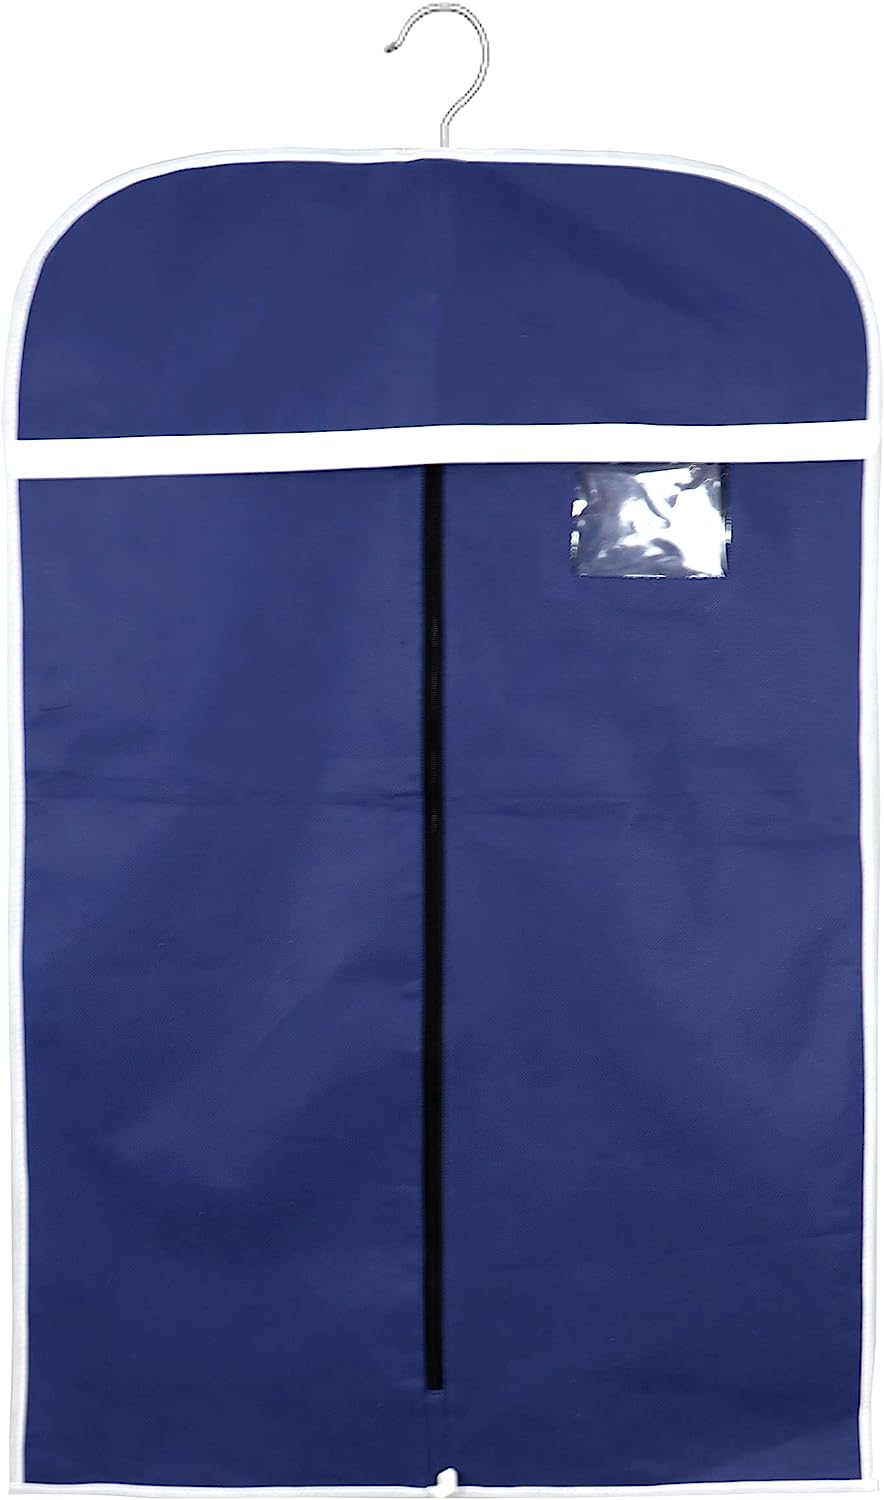 Blue Garments Bag for Hanging Clothes Men Suit Coat Bag for Travel and Clothing Storage of Woman Dresses, Shirt, Coats, Dance Costumes Suit Cover - Closet Storage Long Garment Bags Set of 3